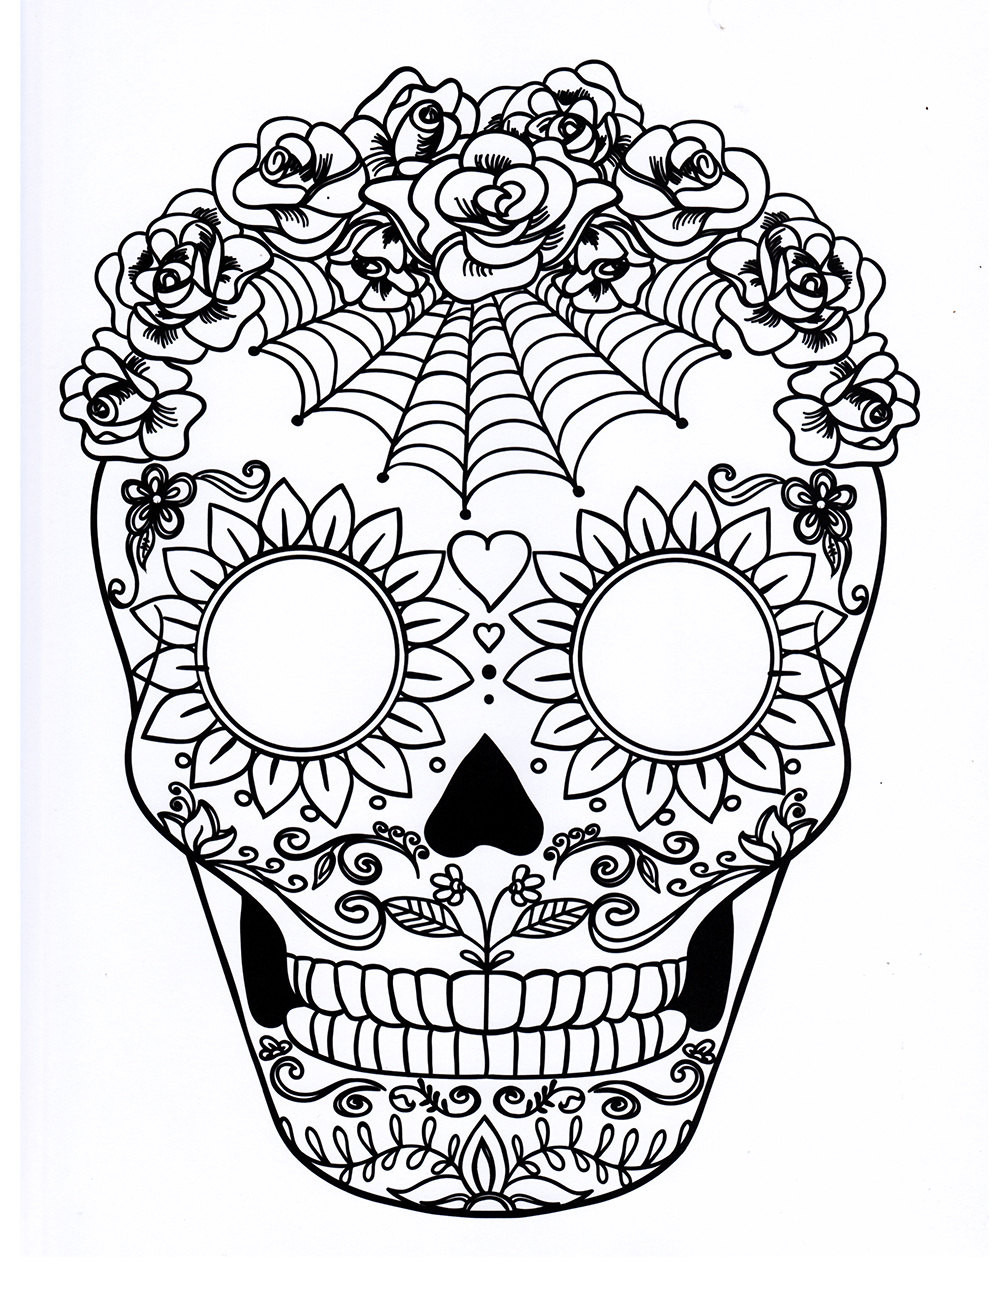 Printable Sugar Skulls Coloring Pages
 Five different sugar skull coloring pages printable